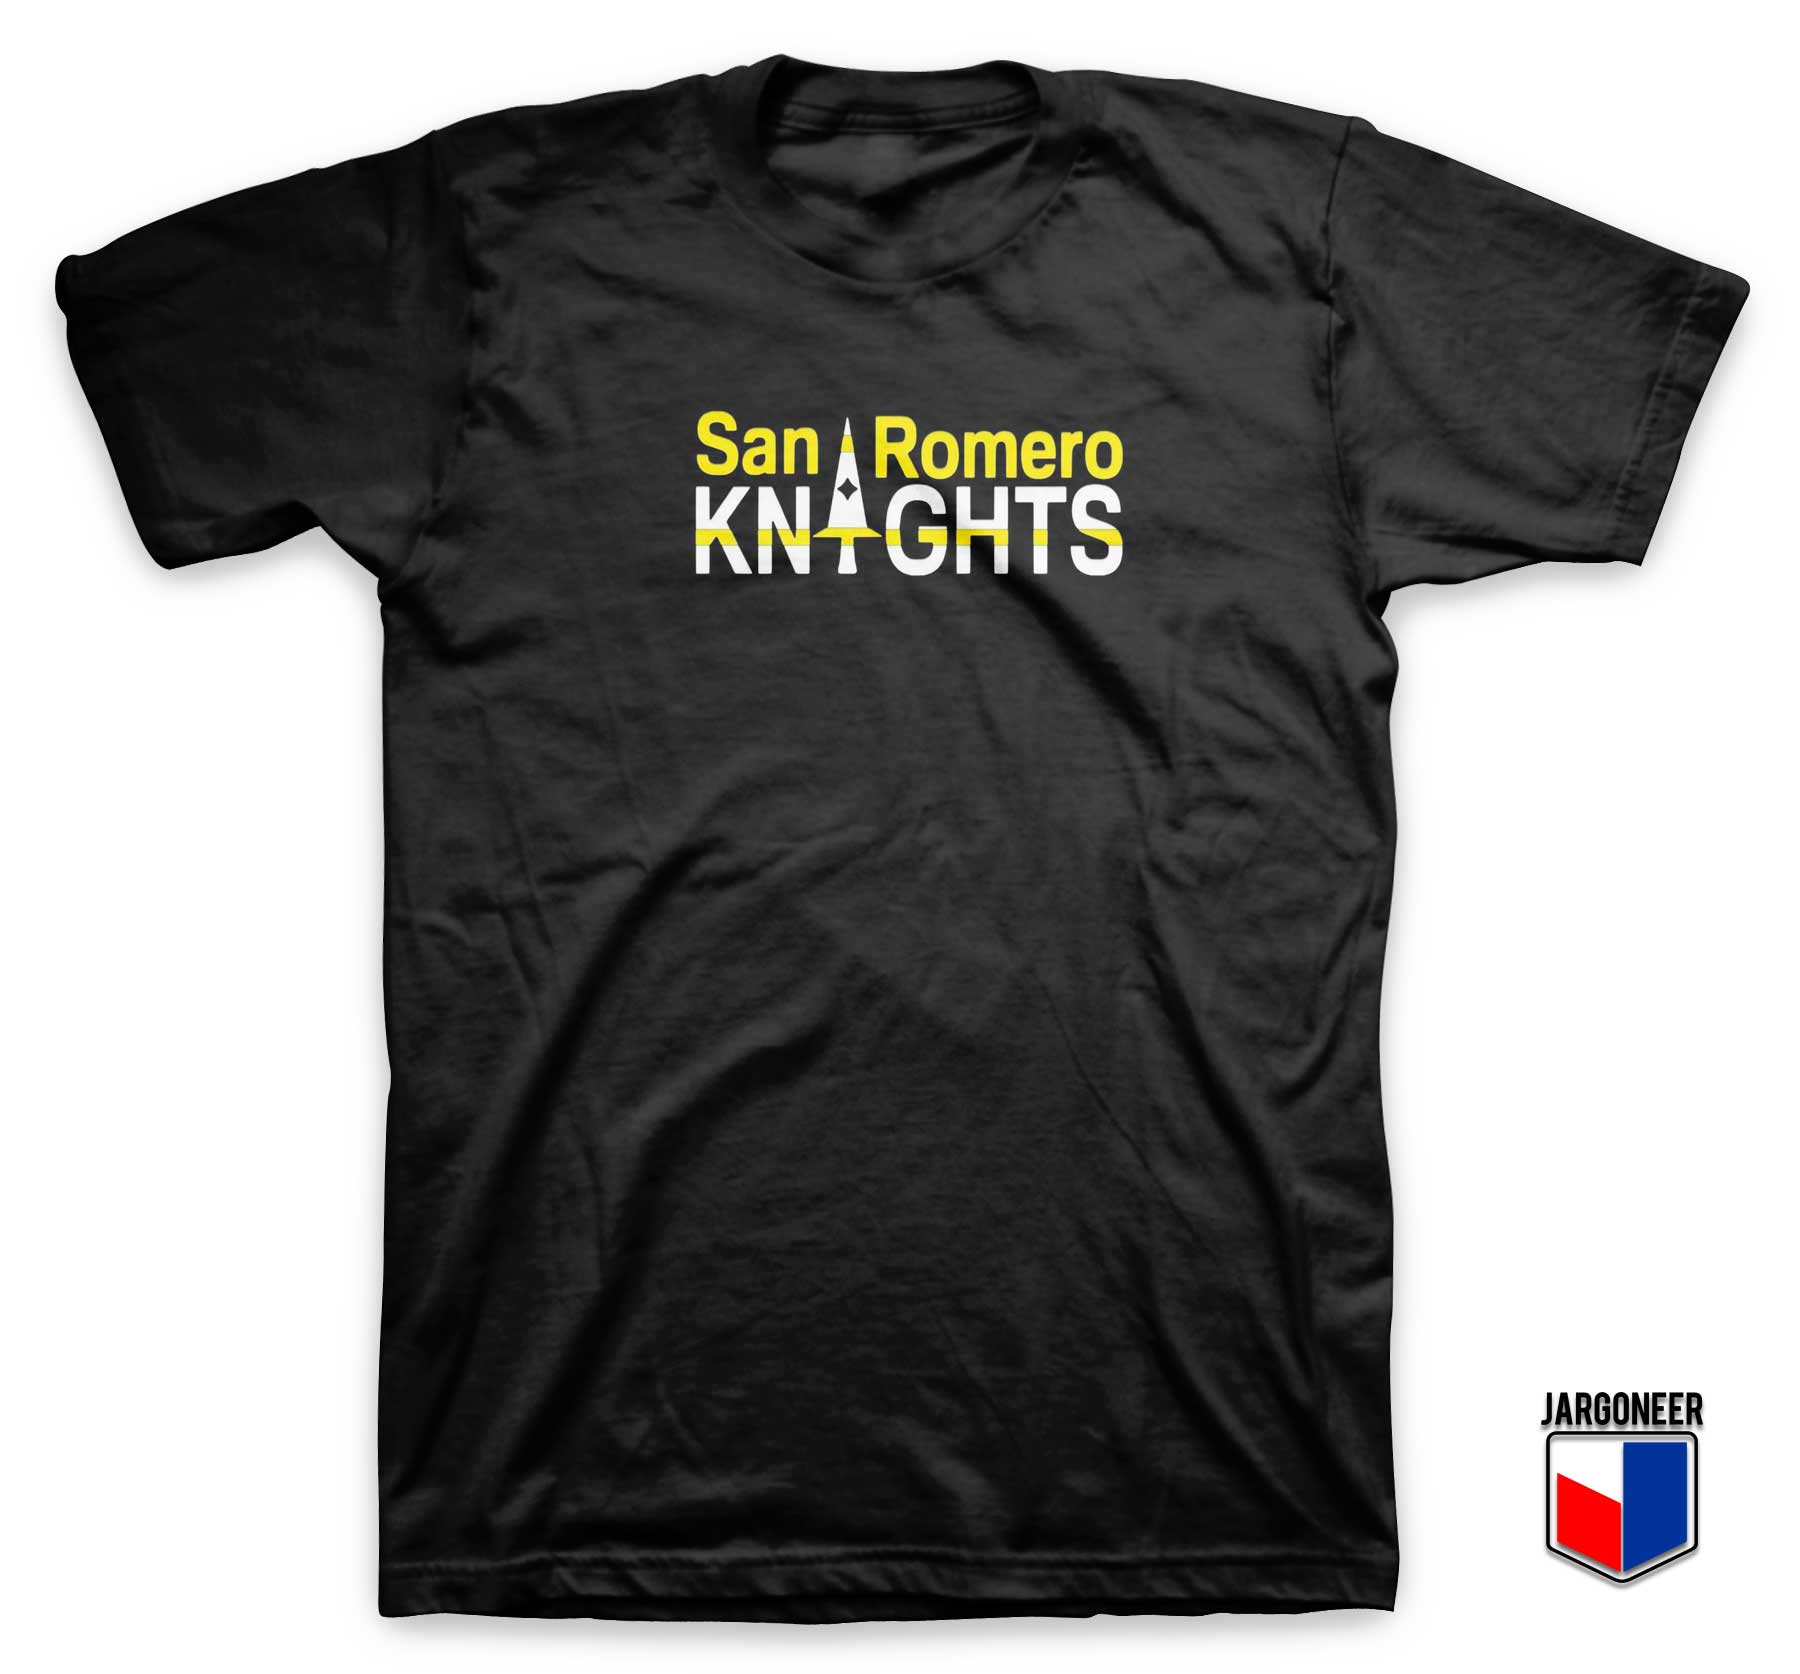 San Romero Knights T Shirt - Shop Unique Graphic Cool Shirt Designs